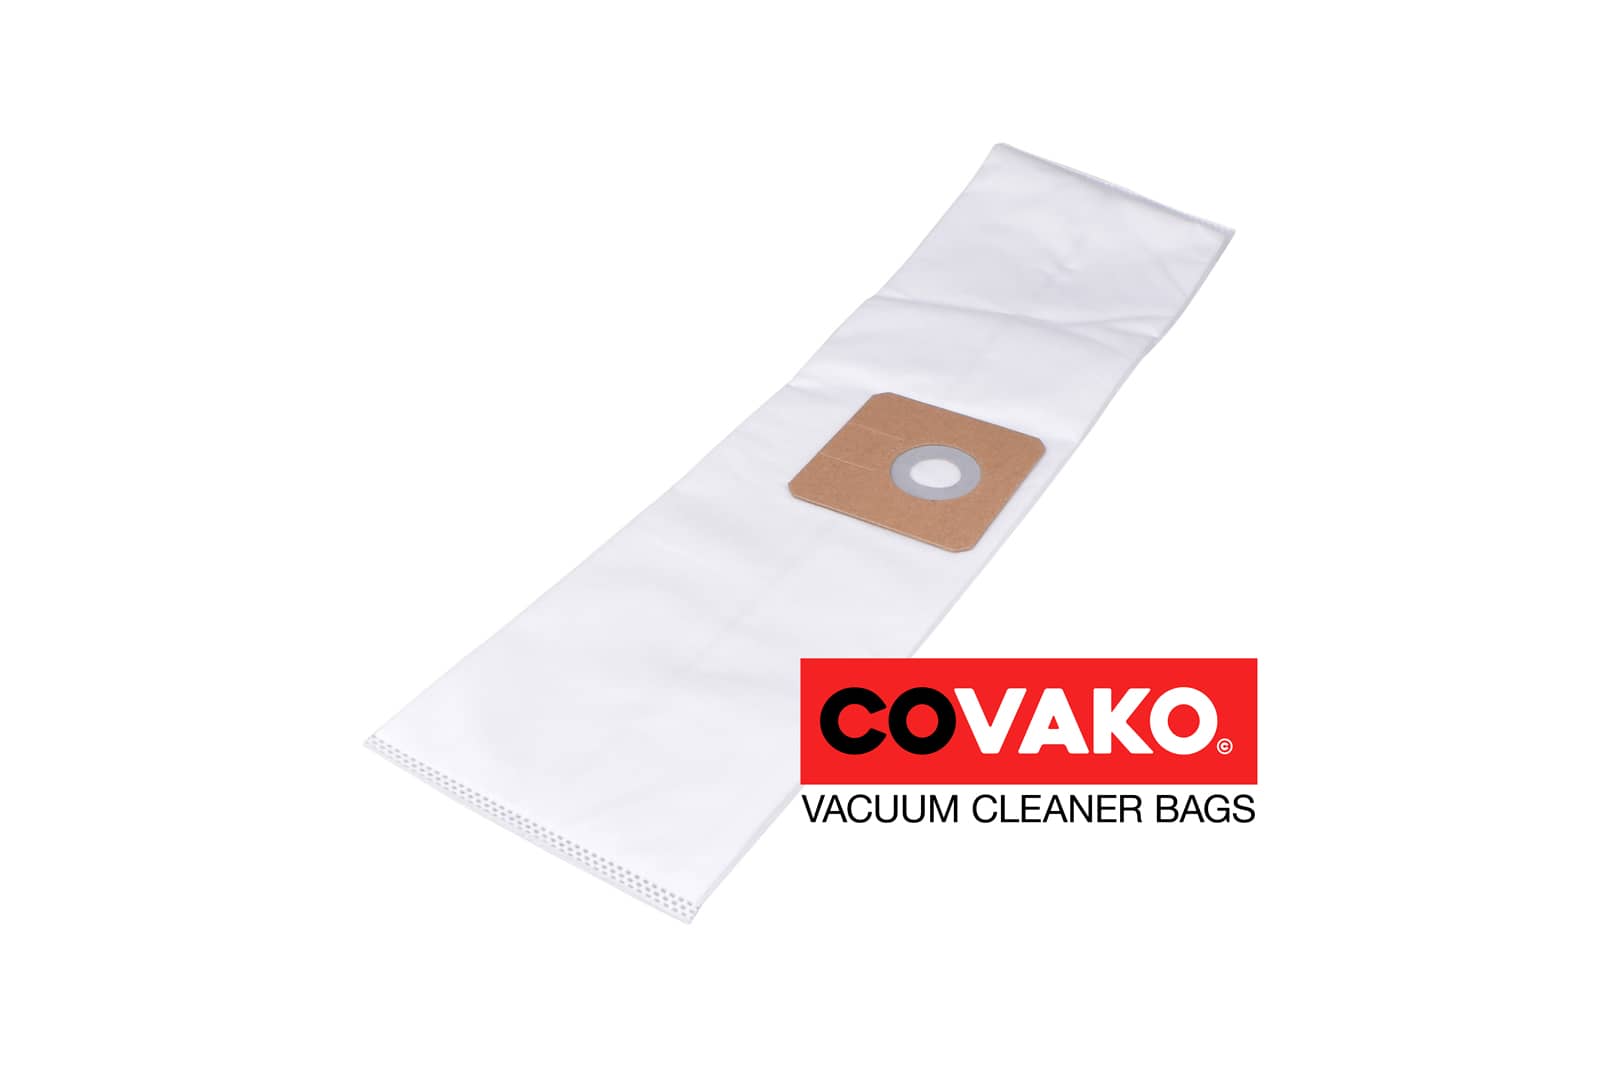 TMB Piccolo Inox / Synthesis - TMB vacuum cleaner bags